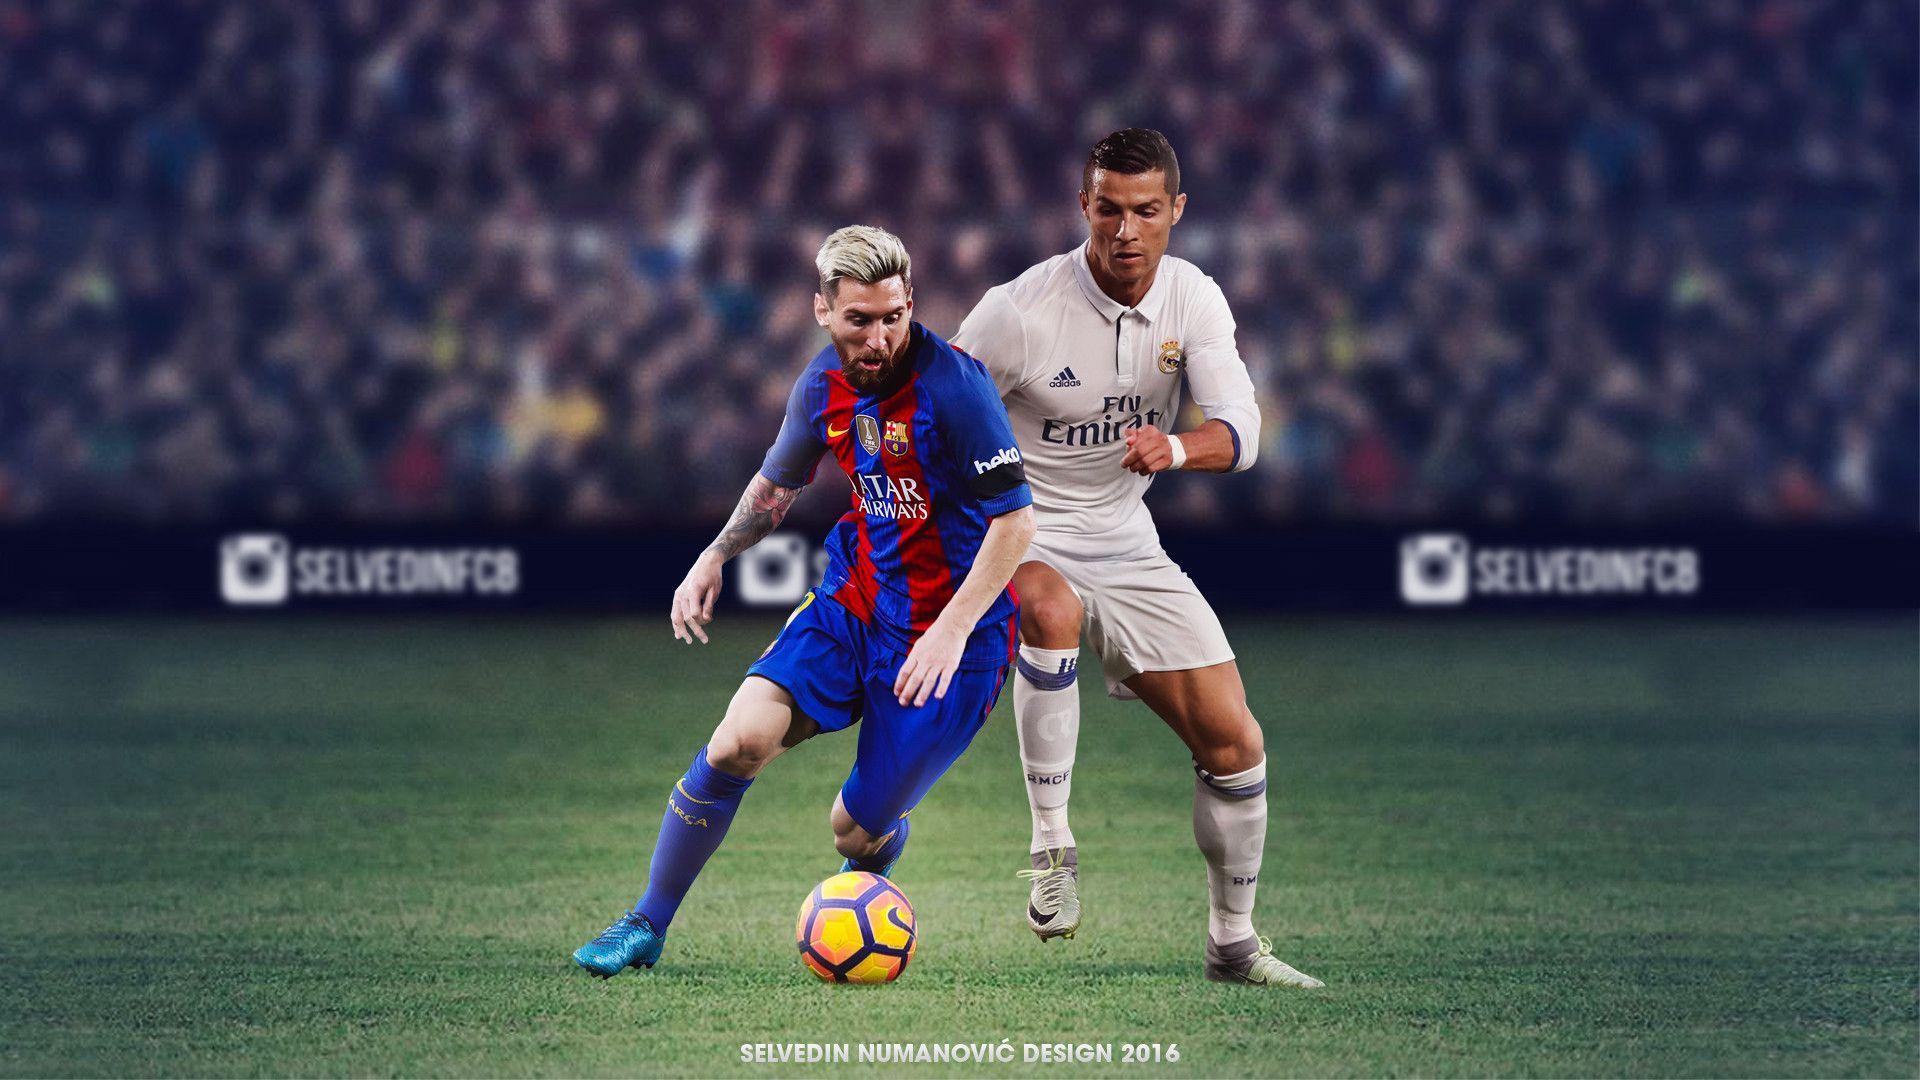 Ronaldo And Messi Wallpaper 75 images